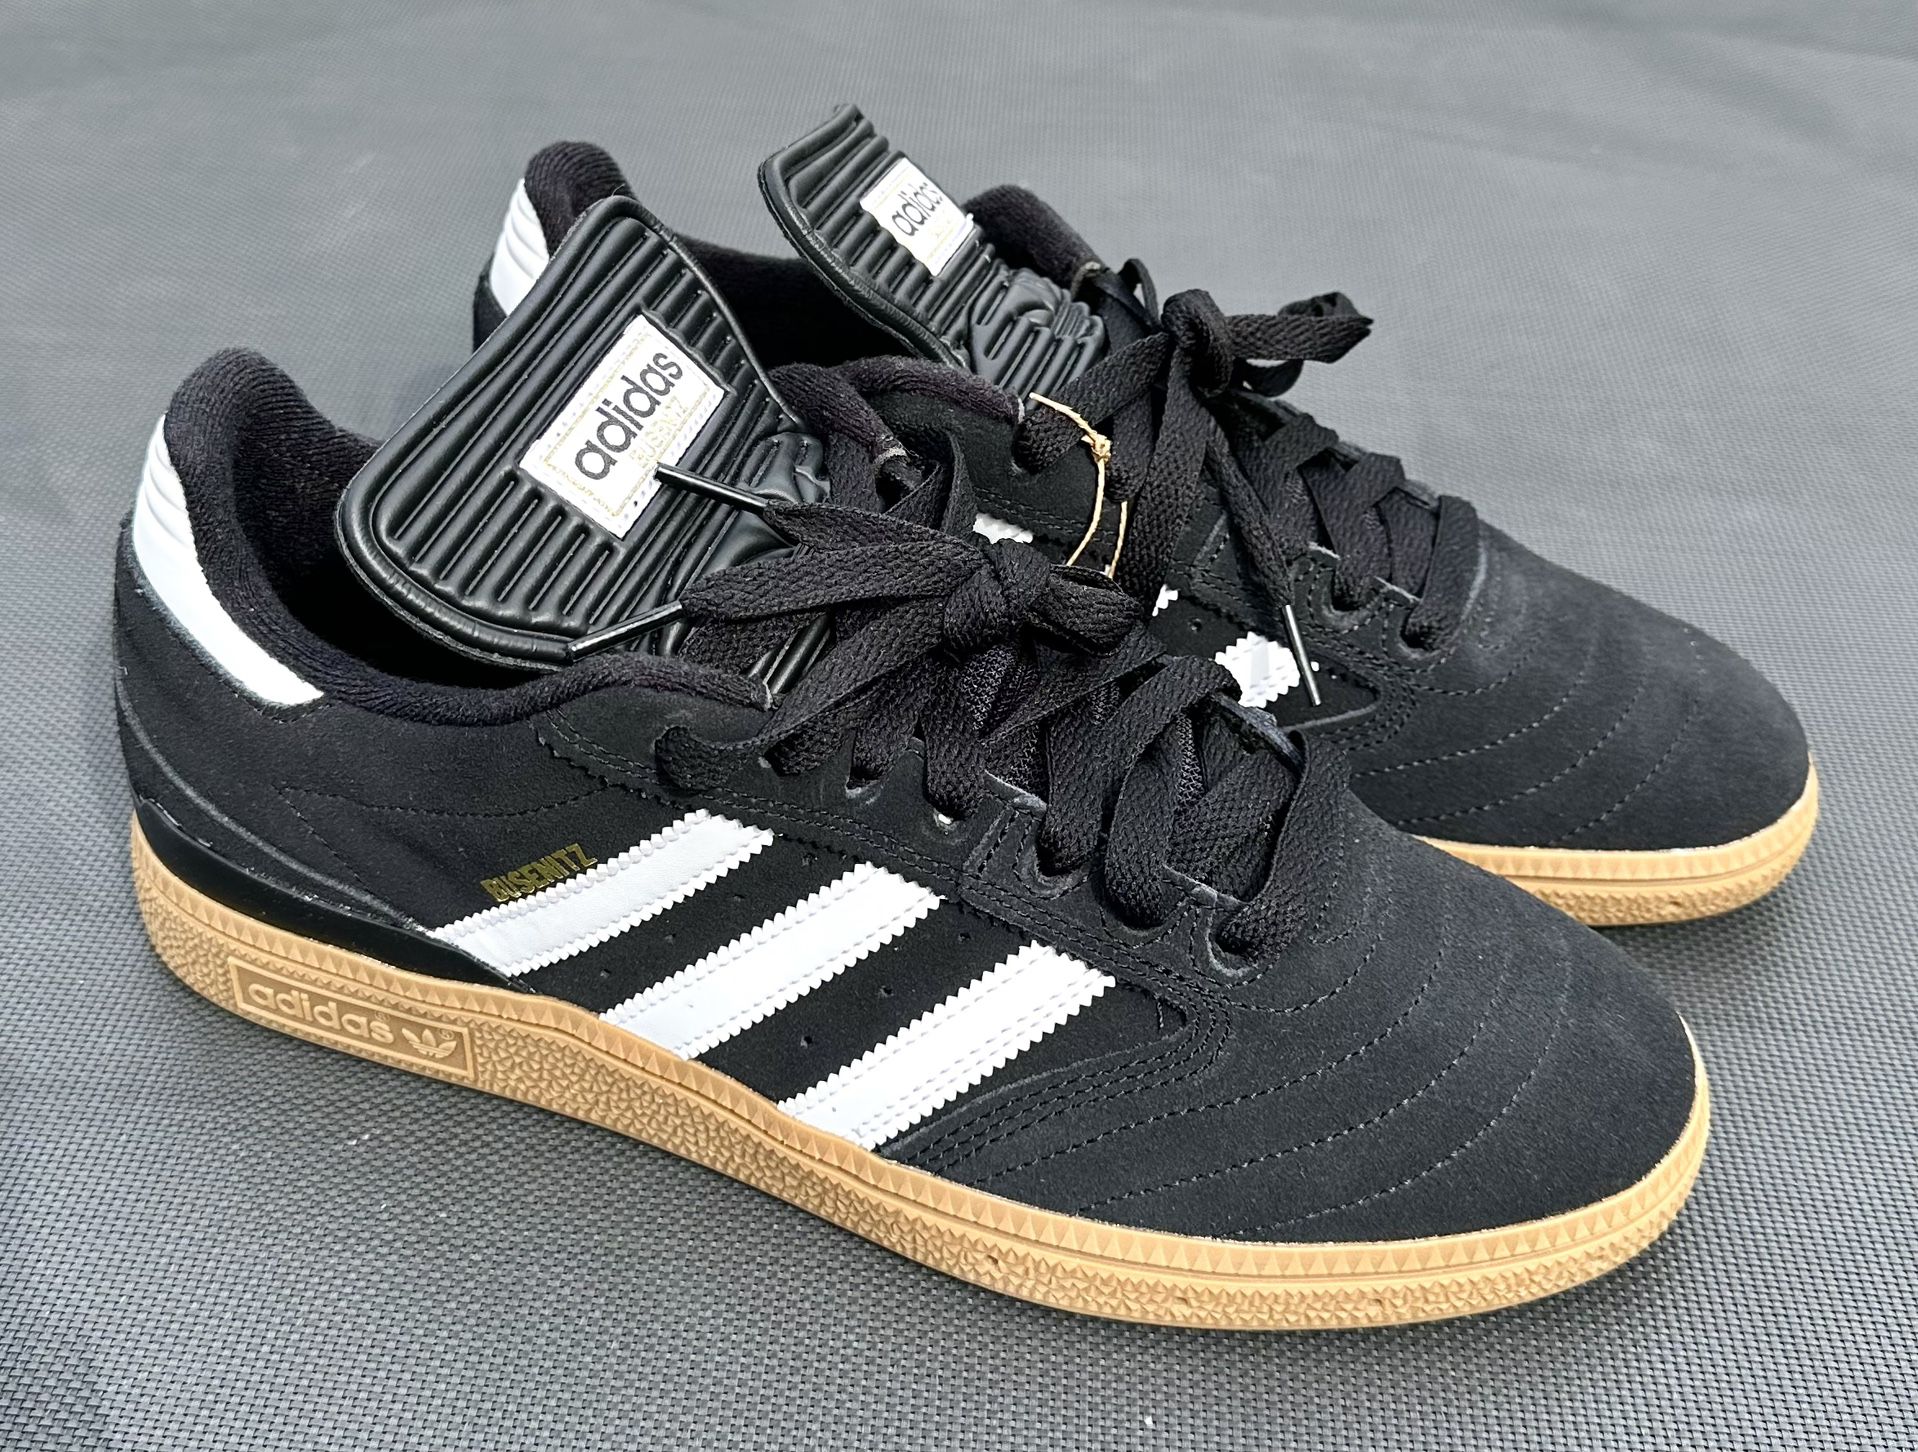 New Adidas Original Busenitz Classic Black White Skateboarding Shoes Men's Size 10